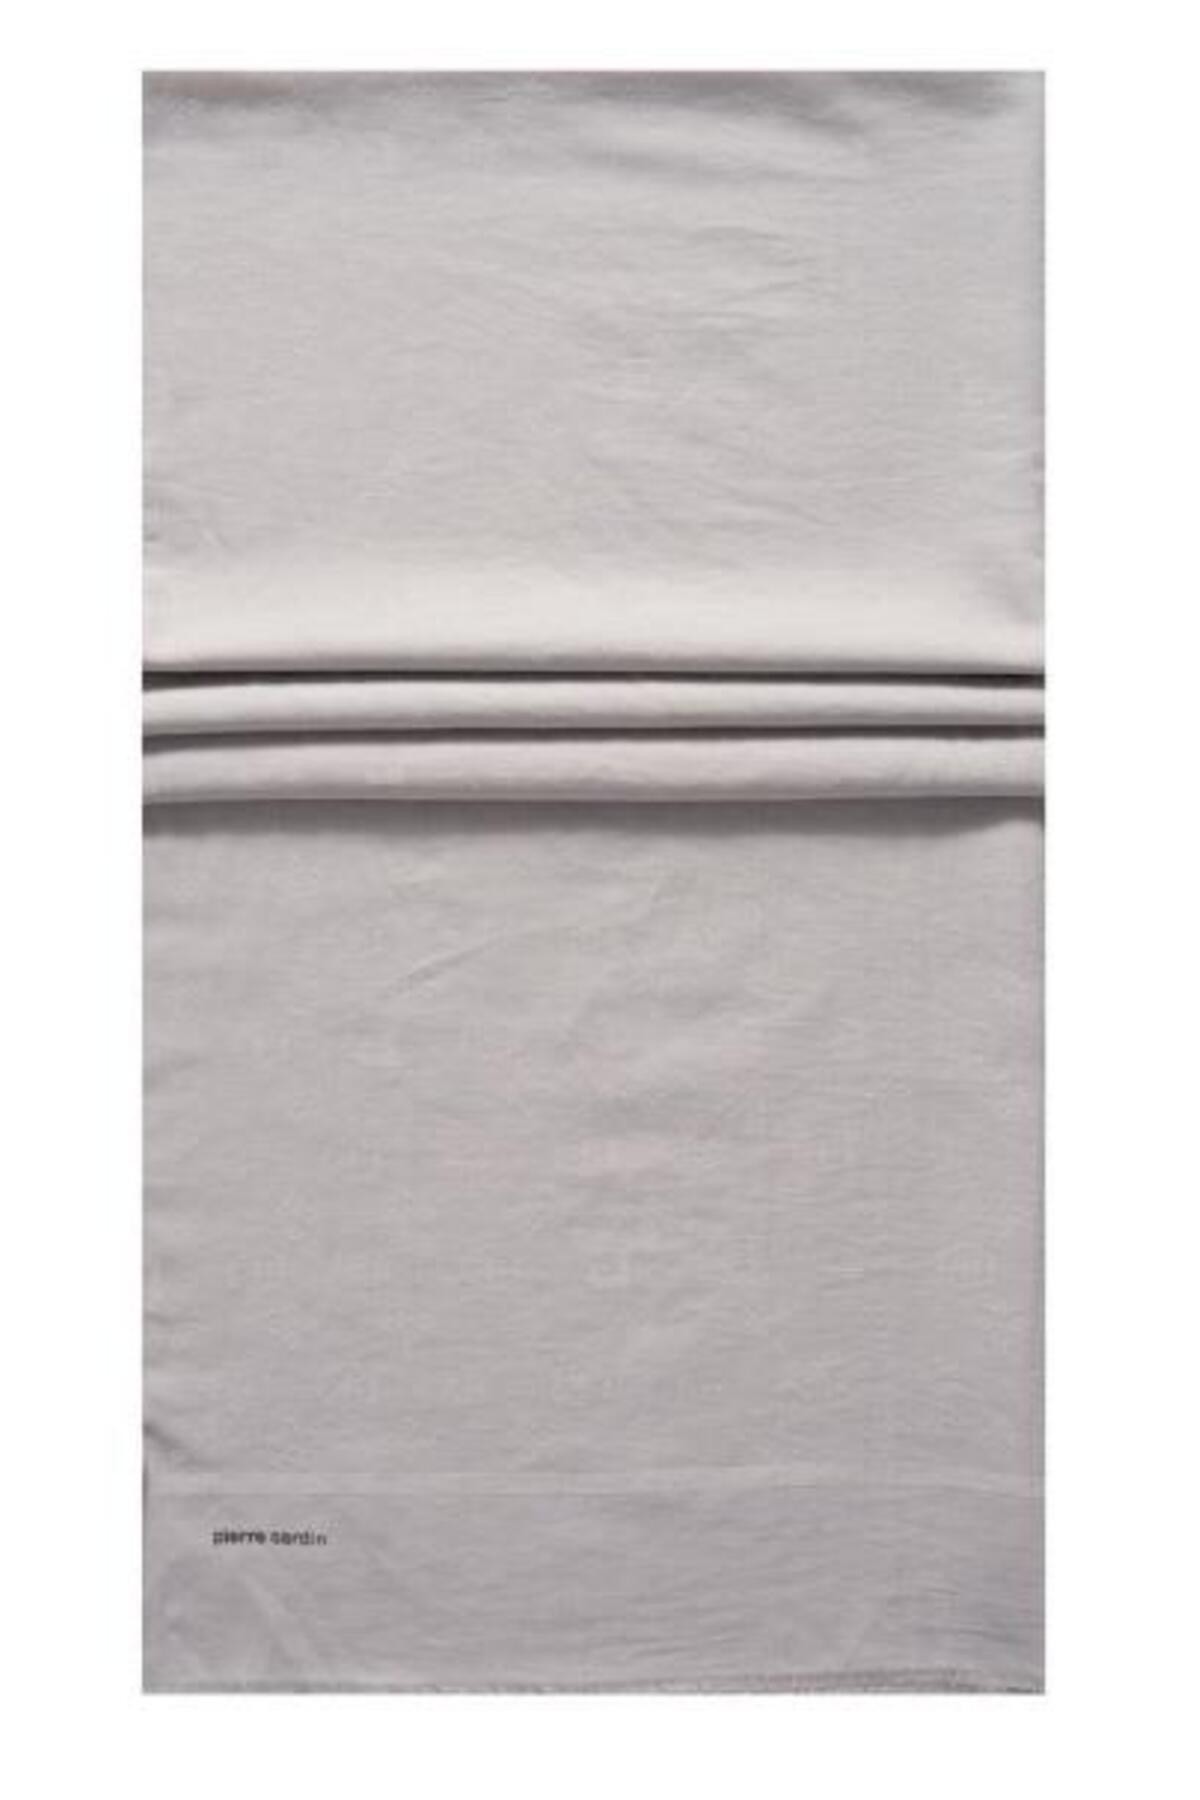 Pierre Cardin 75 x200 Gri Cotton (PAMUK) Şal 1030600-971